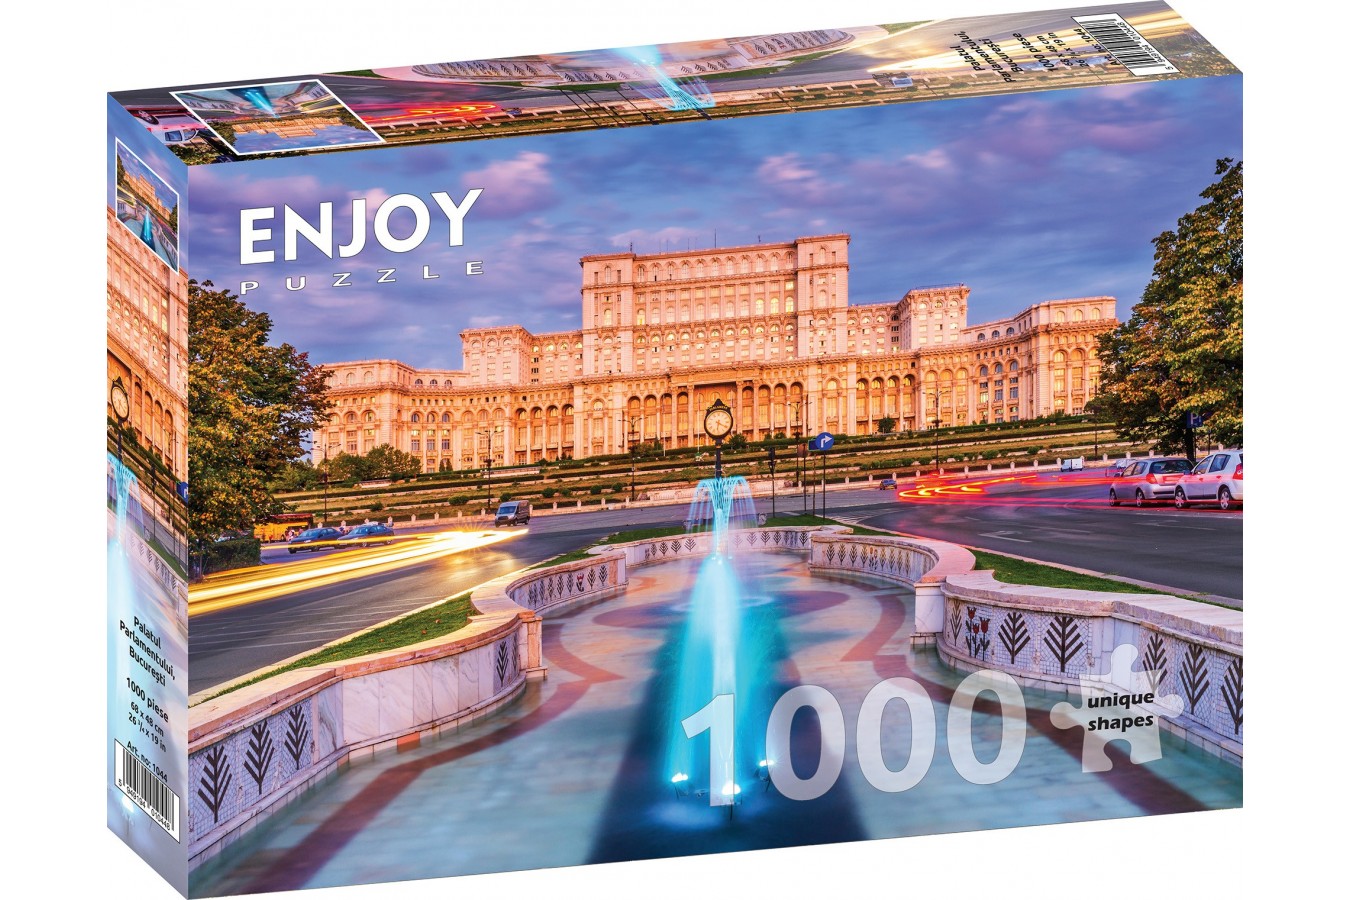 Puzzle 1000 piese Enjoy - Palace of the Parliament, Bucharest (Enjoy-1044)